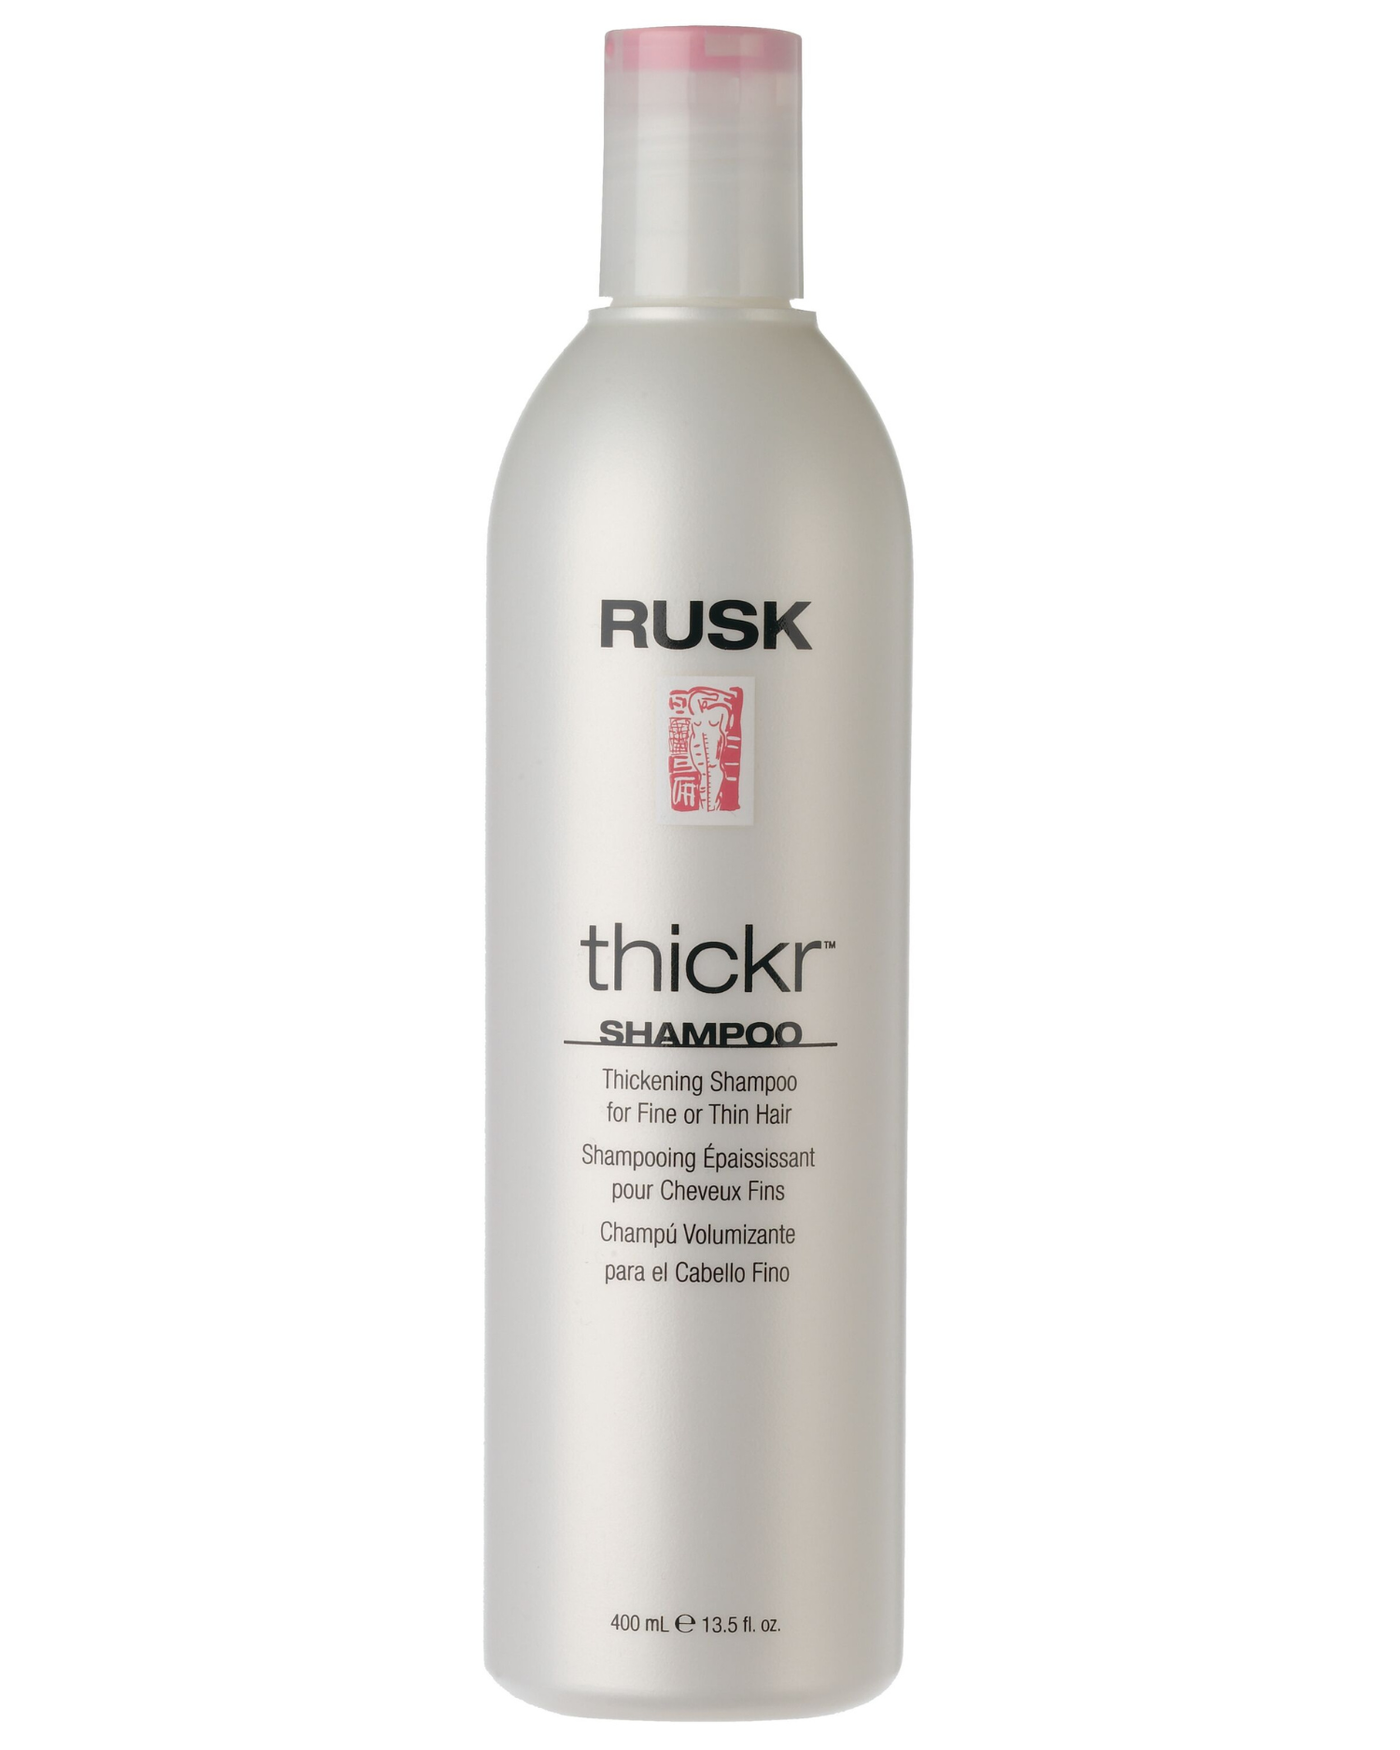 Rusk Thickr Shampoo 400ml Salon Warehouse